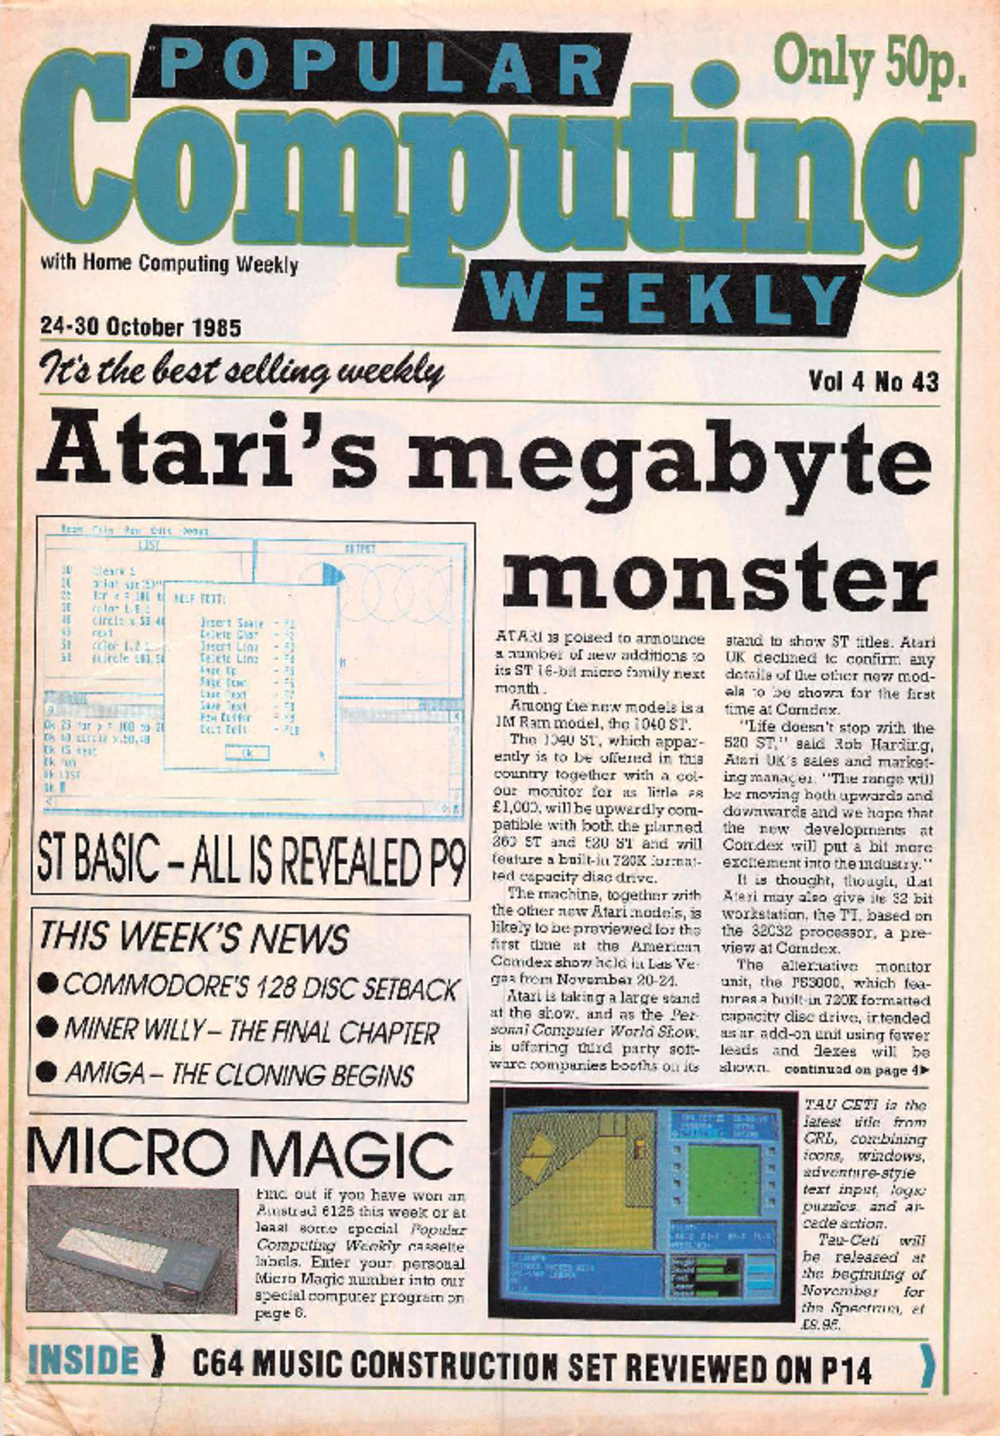 Article: Popular Computing Weekly Vol 4 No 43 - 24-30 October 1985